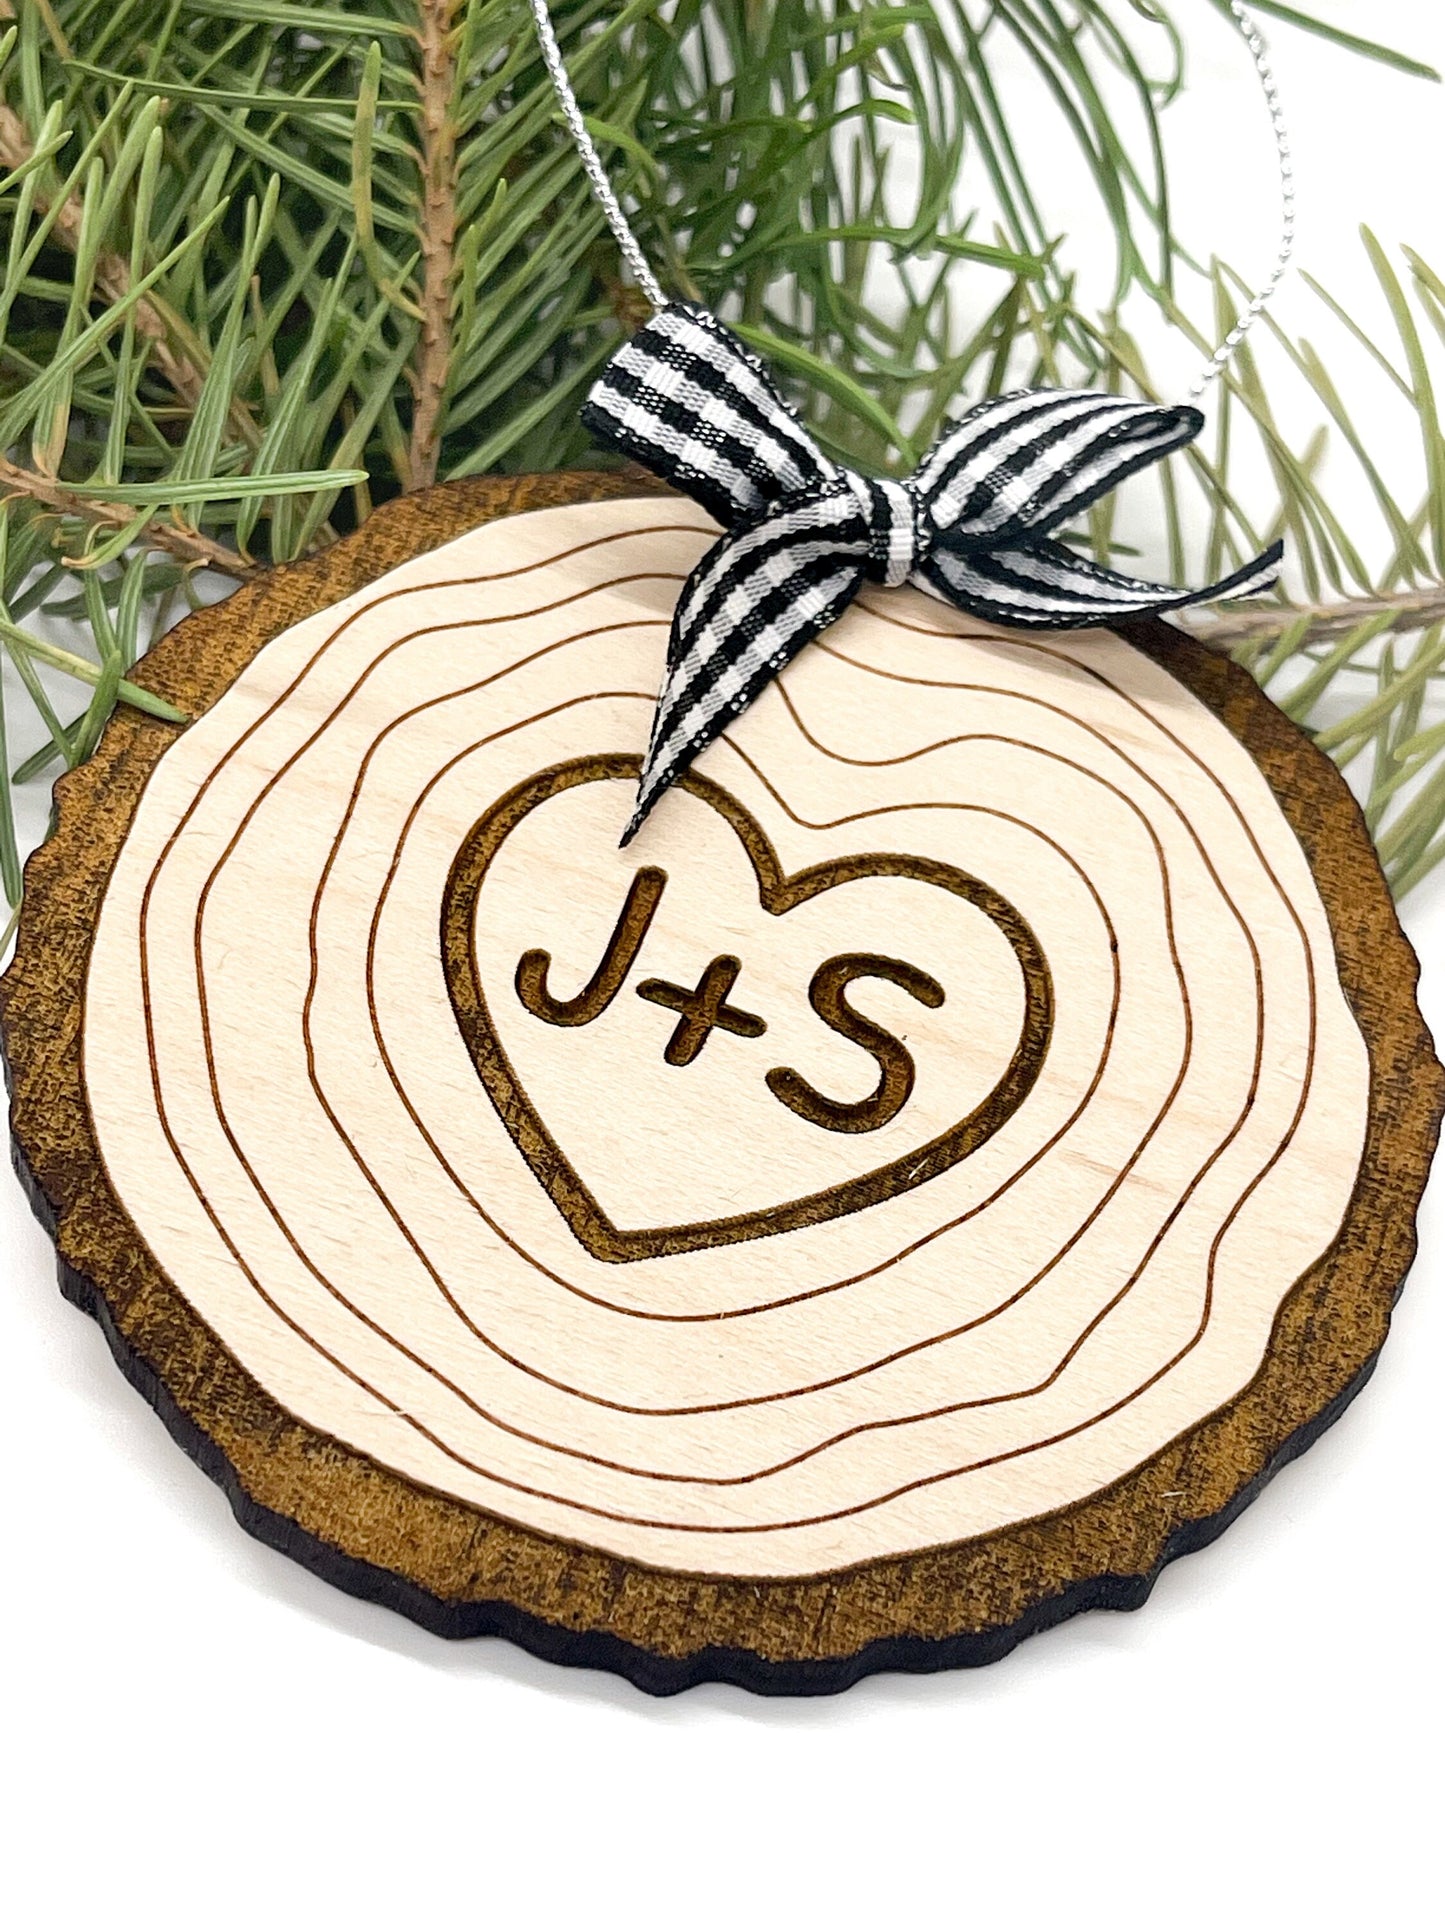 Personalized Tree Ring Ornament | Faux Wood Slice Ornament | Love Tree Ornament